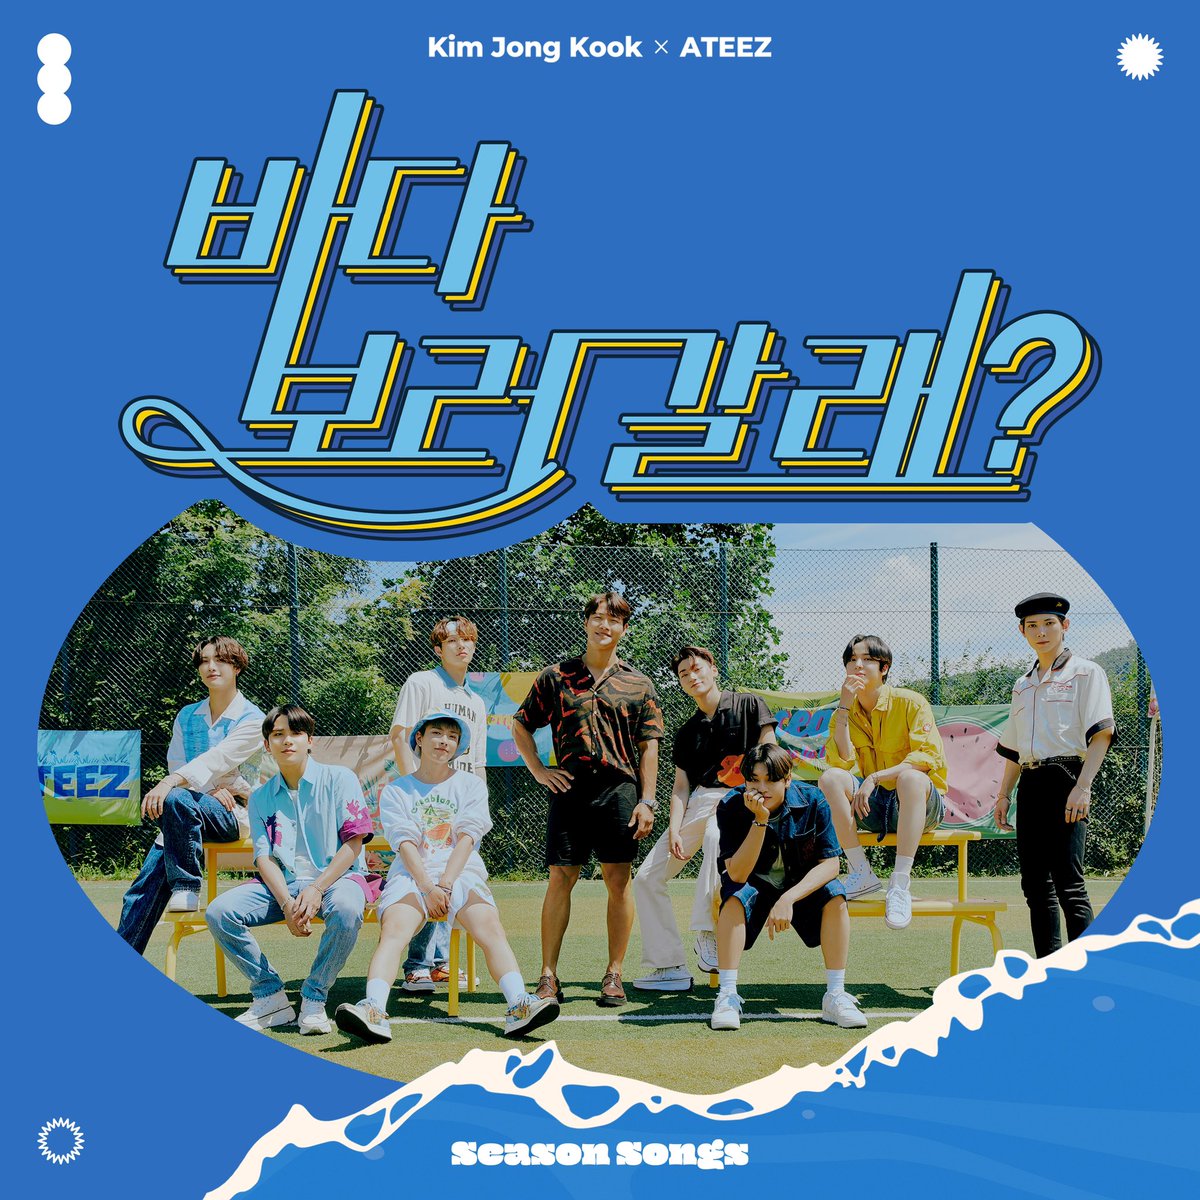 [📢] Kim Jong Kook X ATEEZ [Season Songs]
⠀
[Season Songs]가 공개되었습니다.
에이티니의 많은 관심과 사랑 부탁드려요🎧🌊
⠀
Melon ▶ kko.to/kavSwc44M
genie ▶ is.gd/EvIR8y
⠀
#SeasonSongs #바다보러갈래 #김종국 #KIMJONGKOOK #ATEEZ #에이티즈